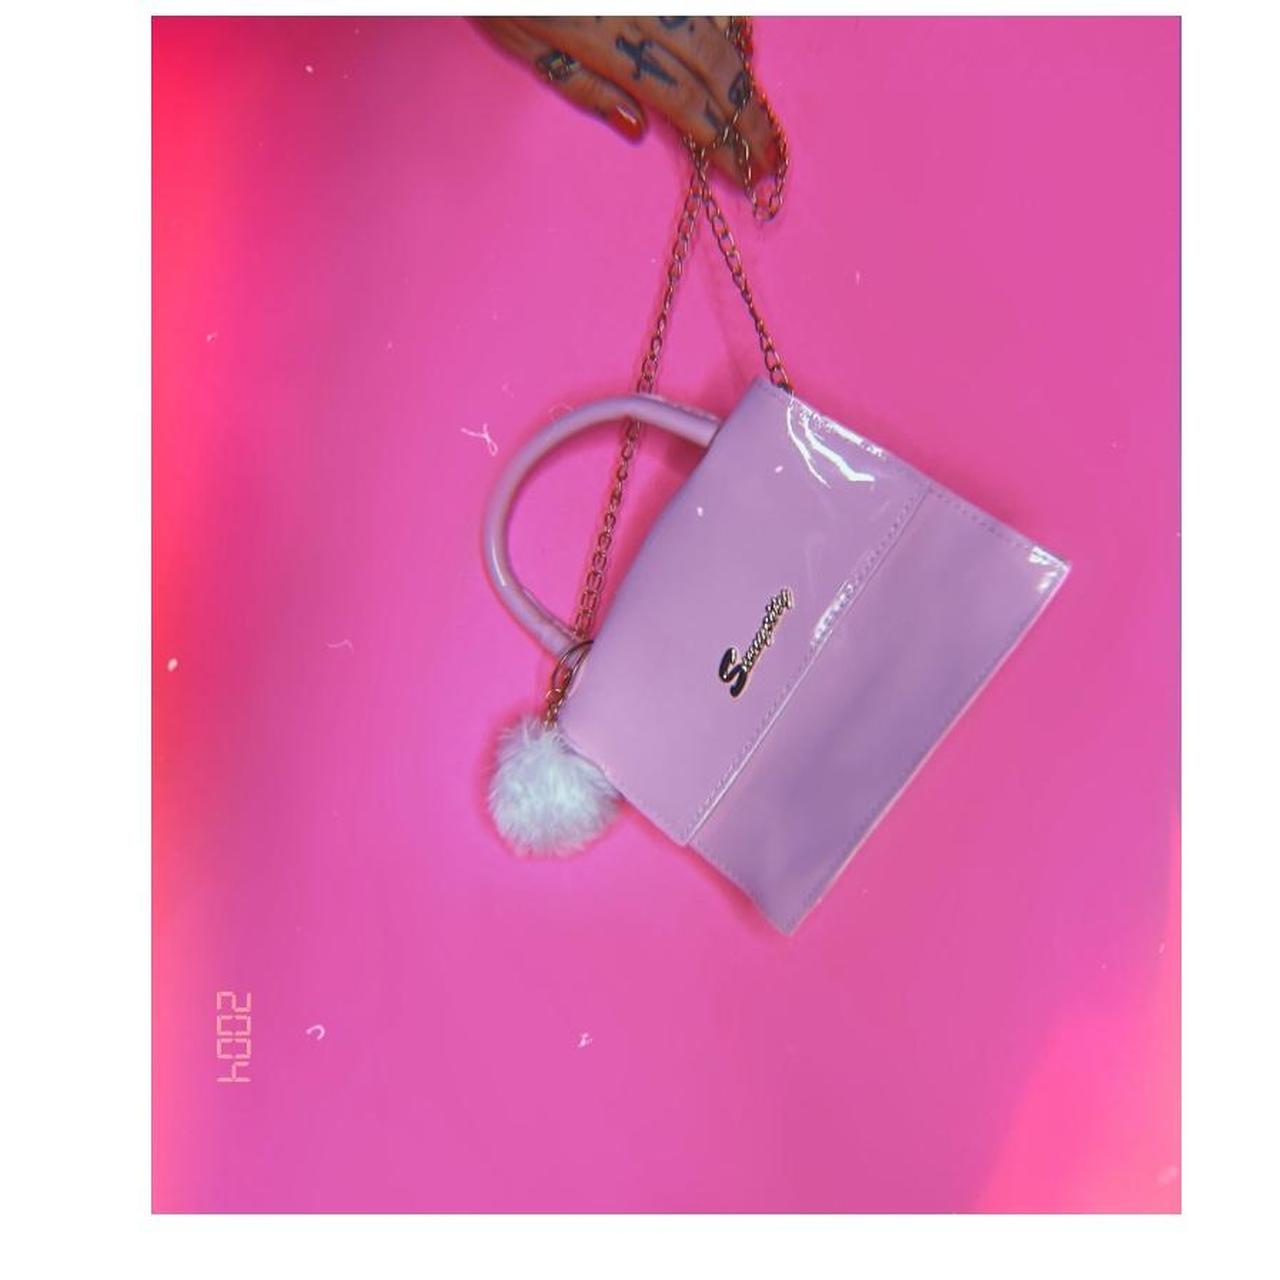 chanel pink medium bag